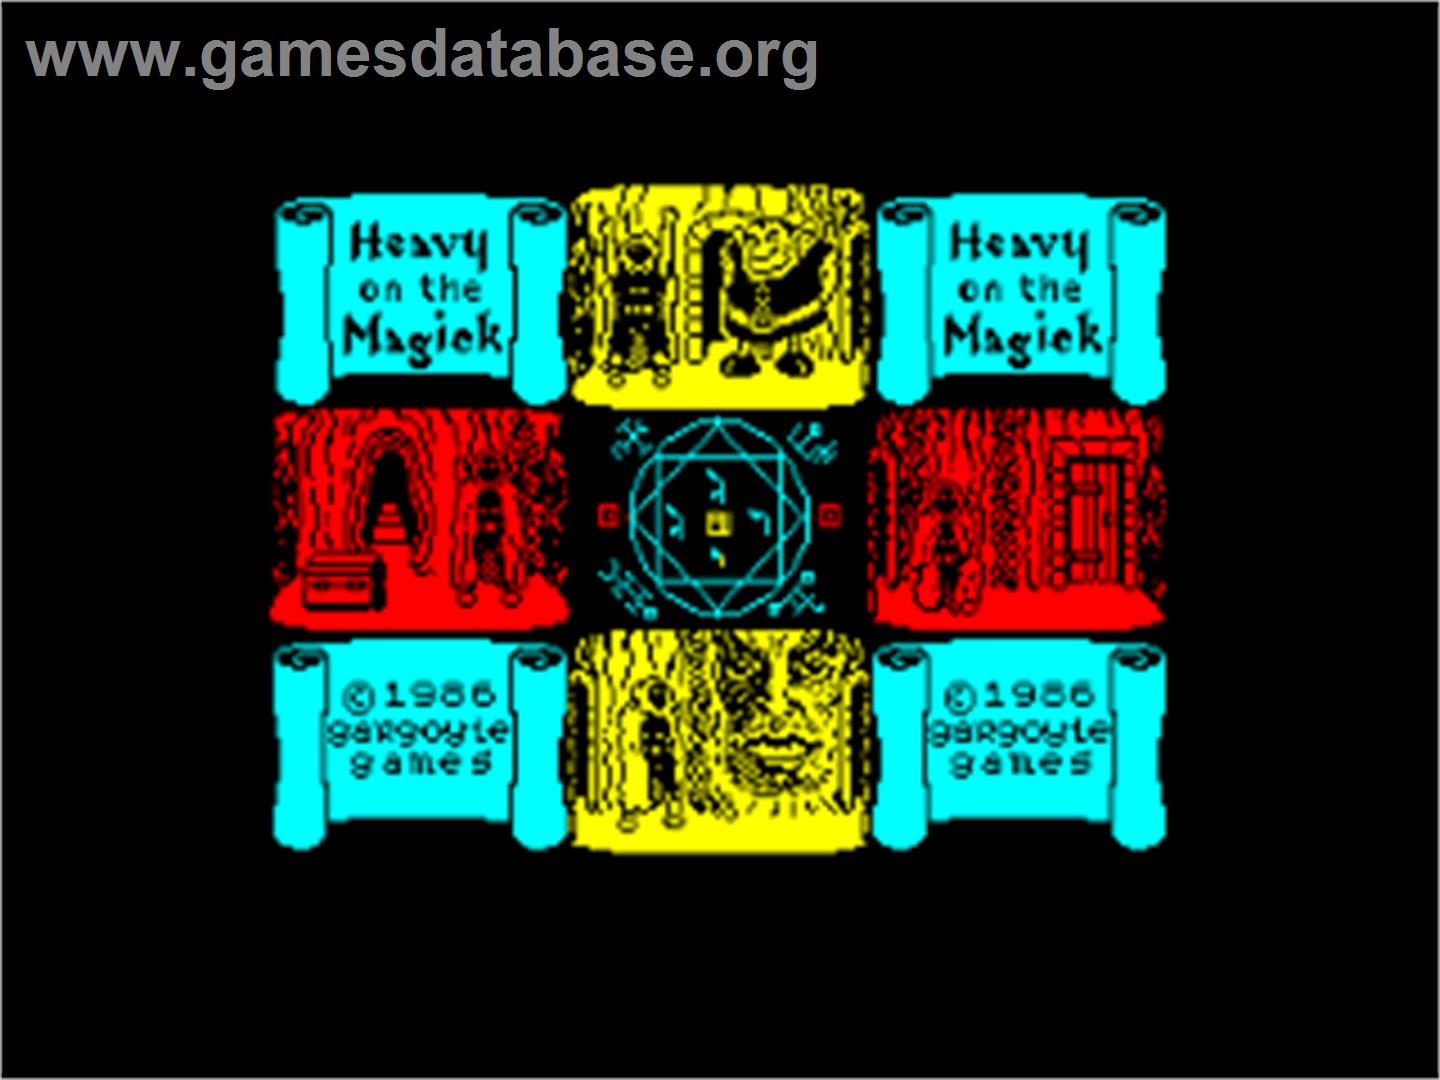 Heavy on the Magick - Amstrad CPC - Artwork - Title Screen